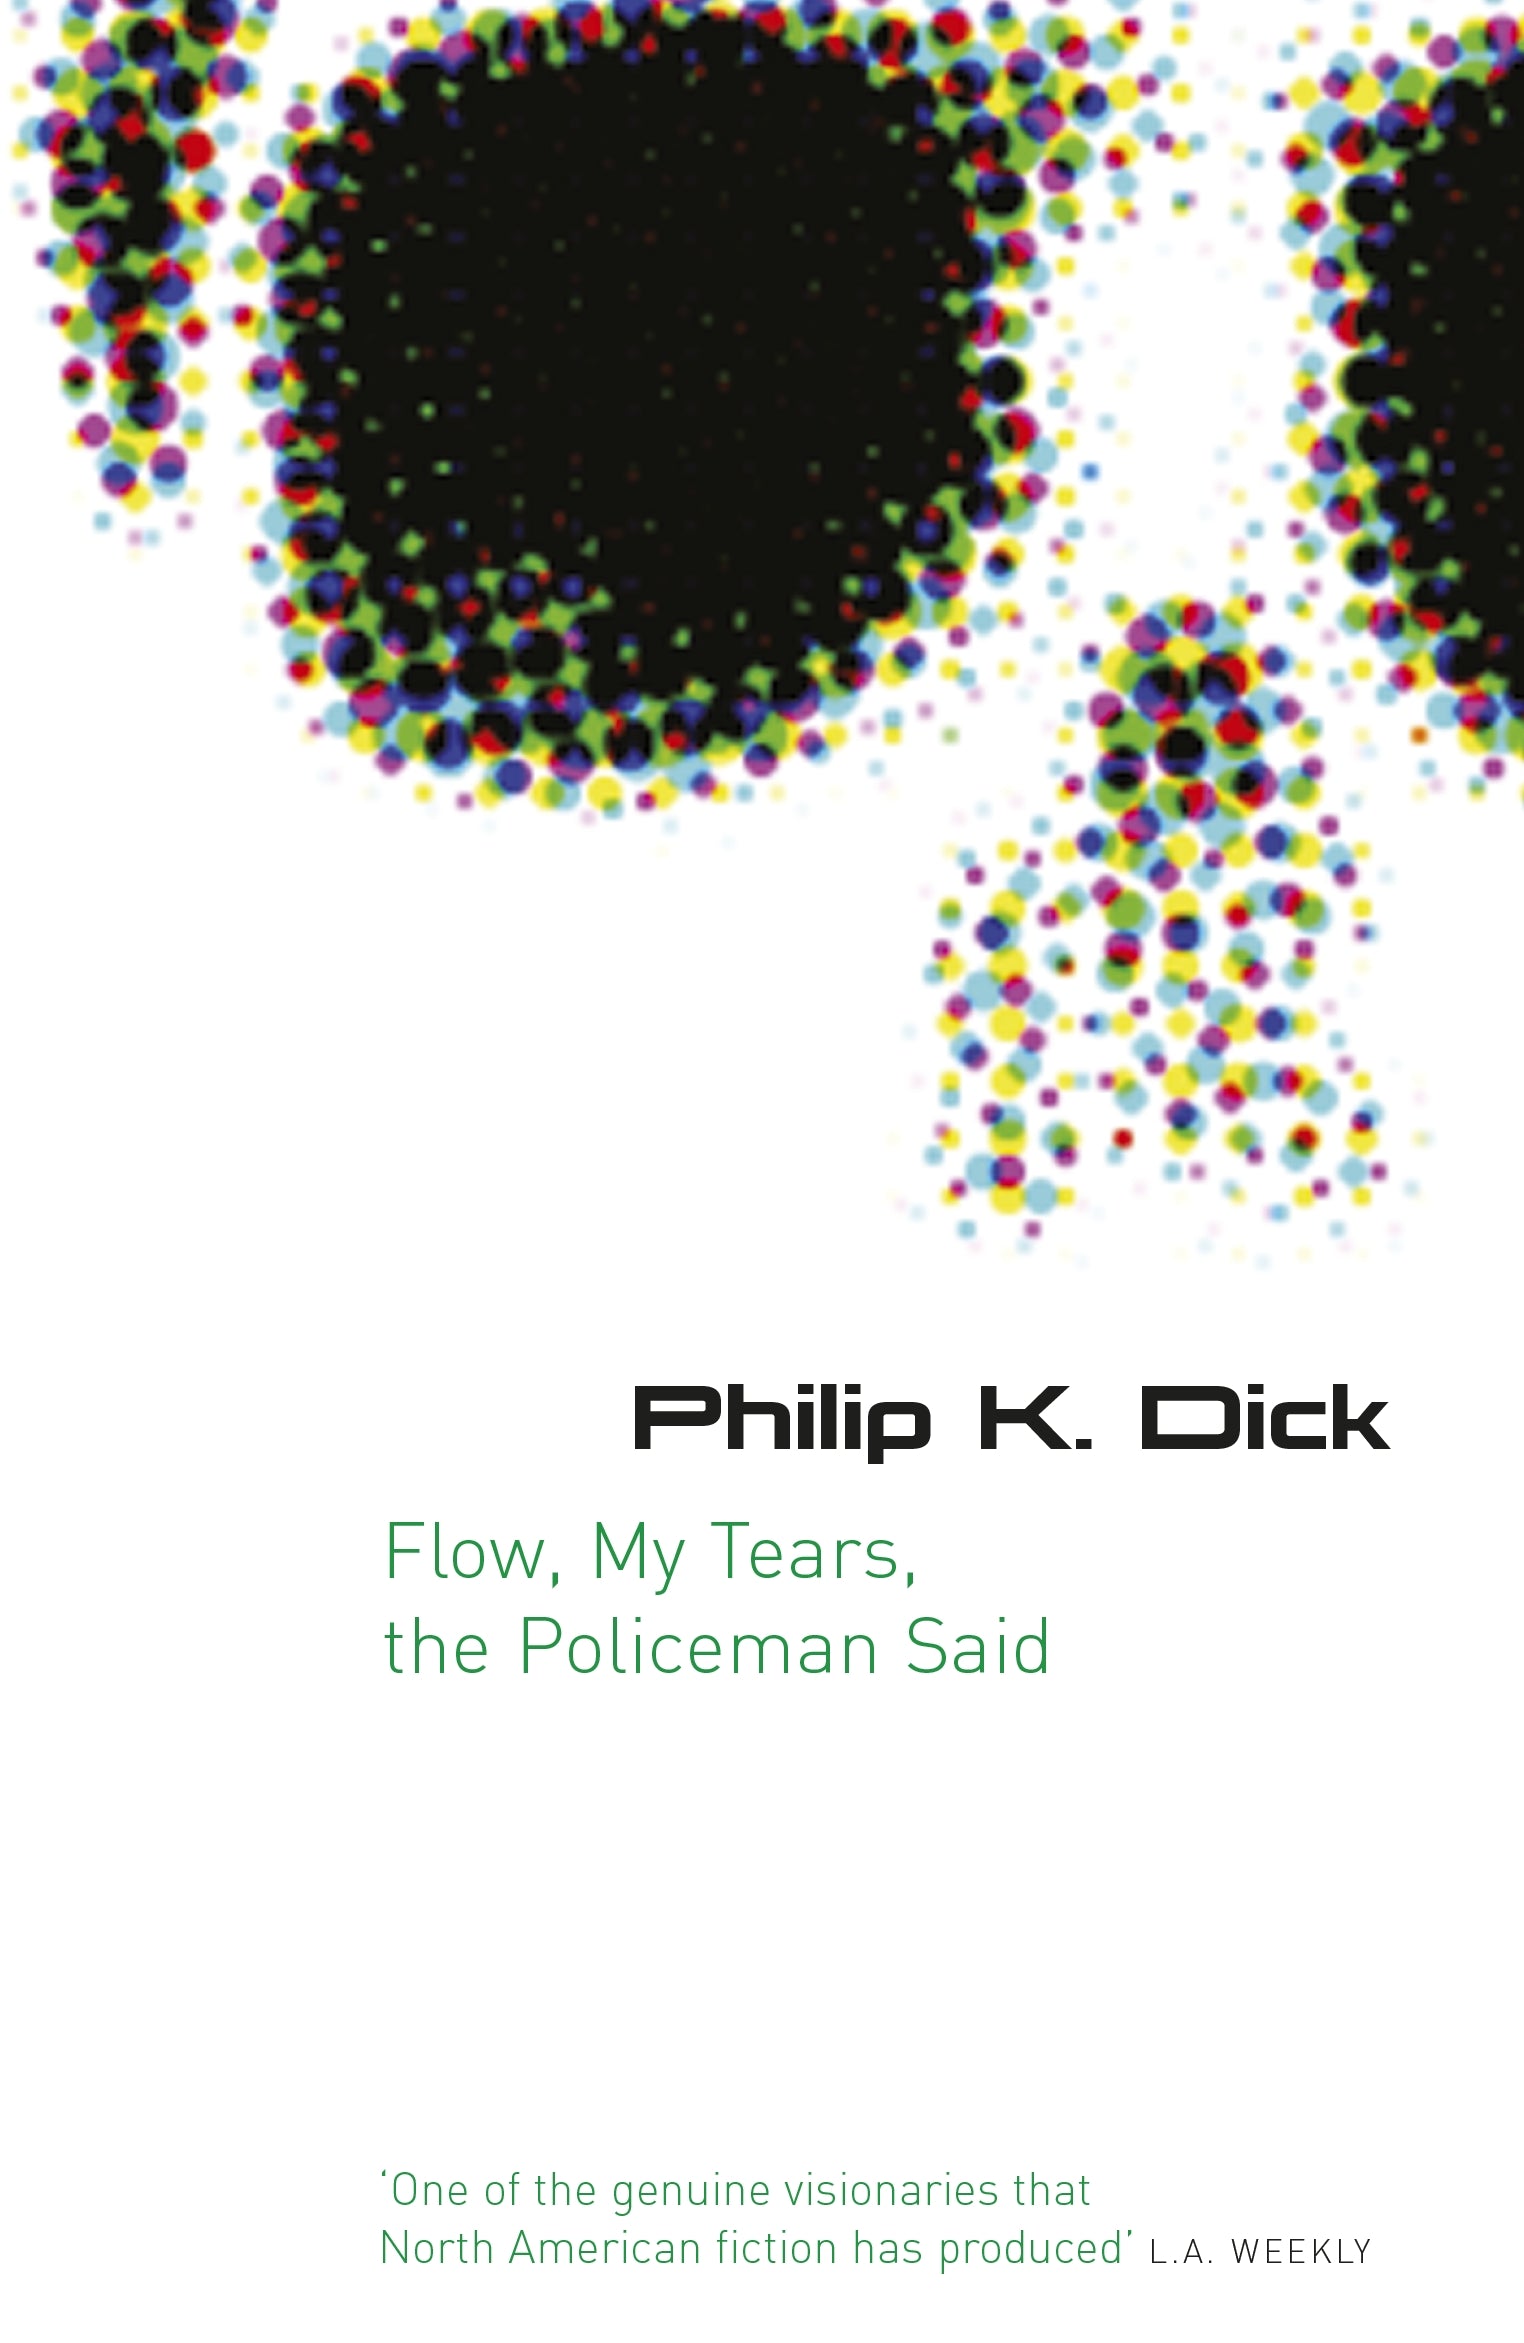 Flow My Tears, The Policeman Said by Philip K Dick